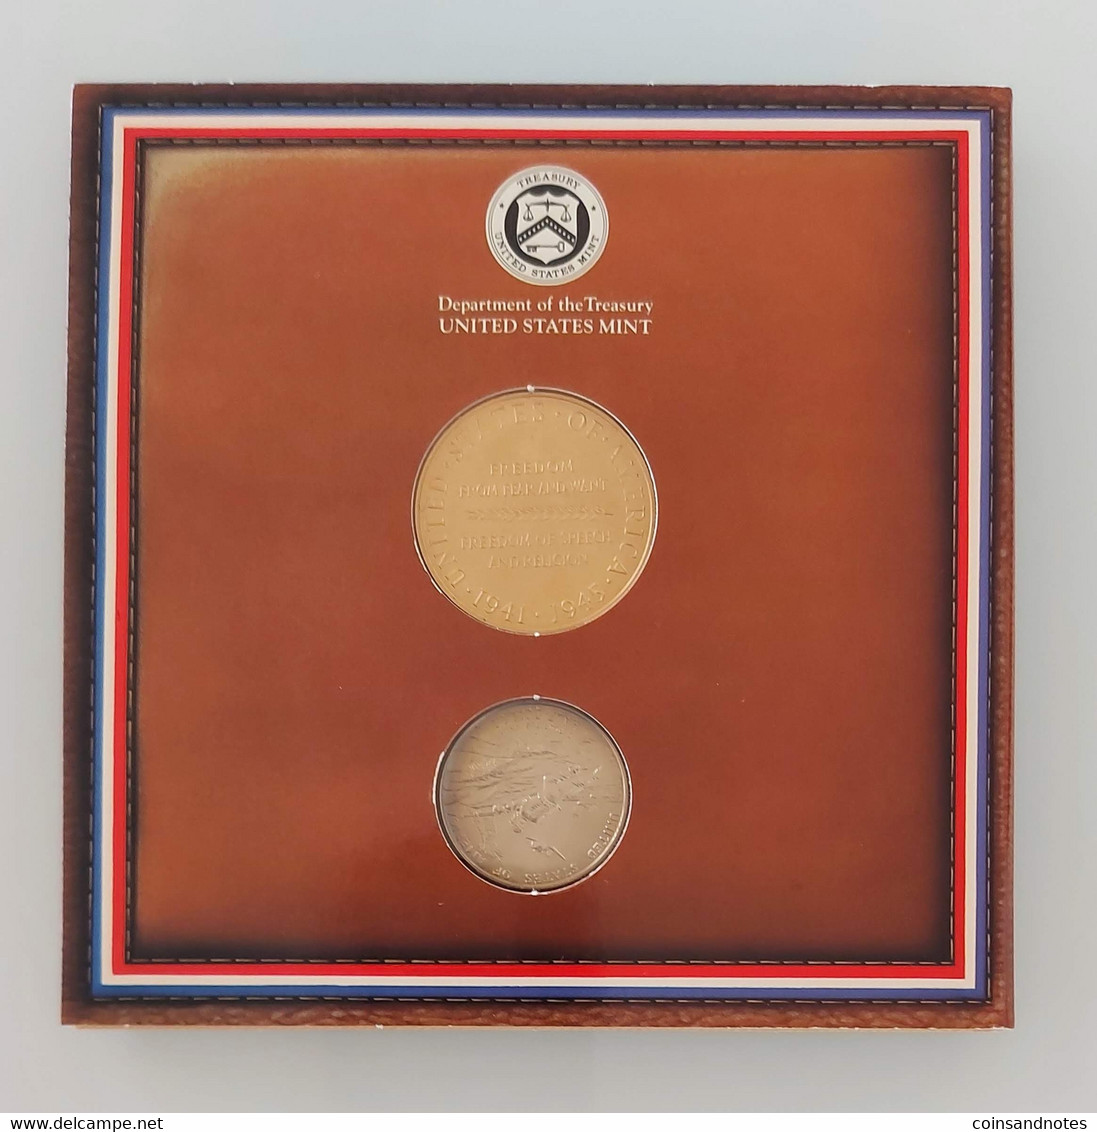 USA 1993 - Comm. Coin & Victory Medal Set 'WWII 50th Anniversary’ - COA - Collezioni